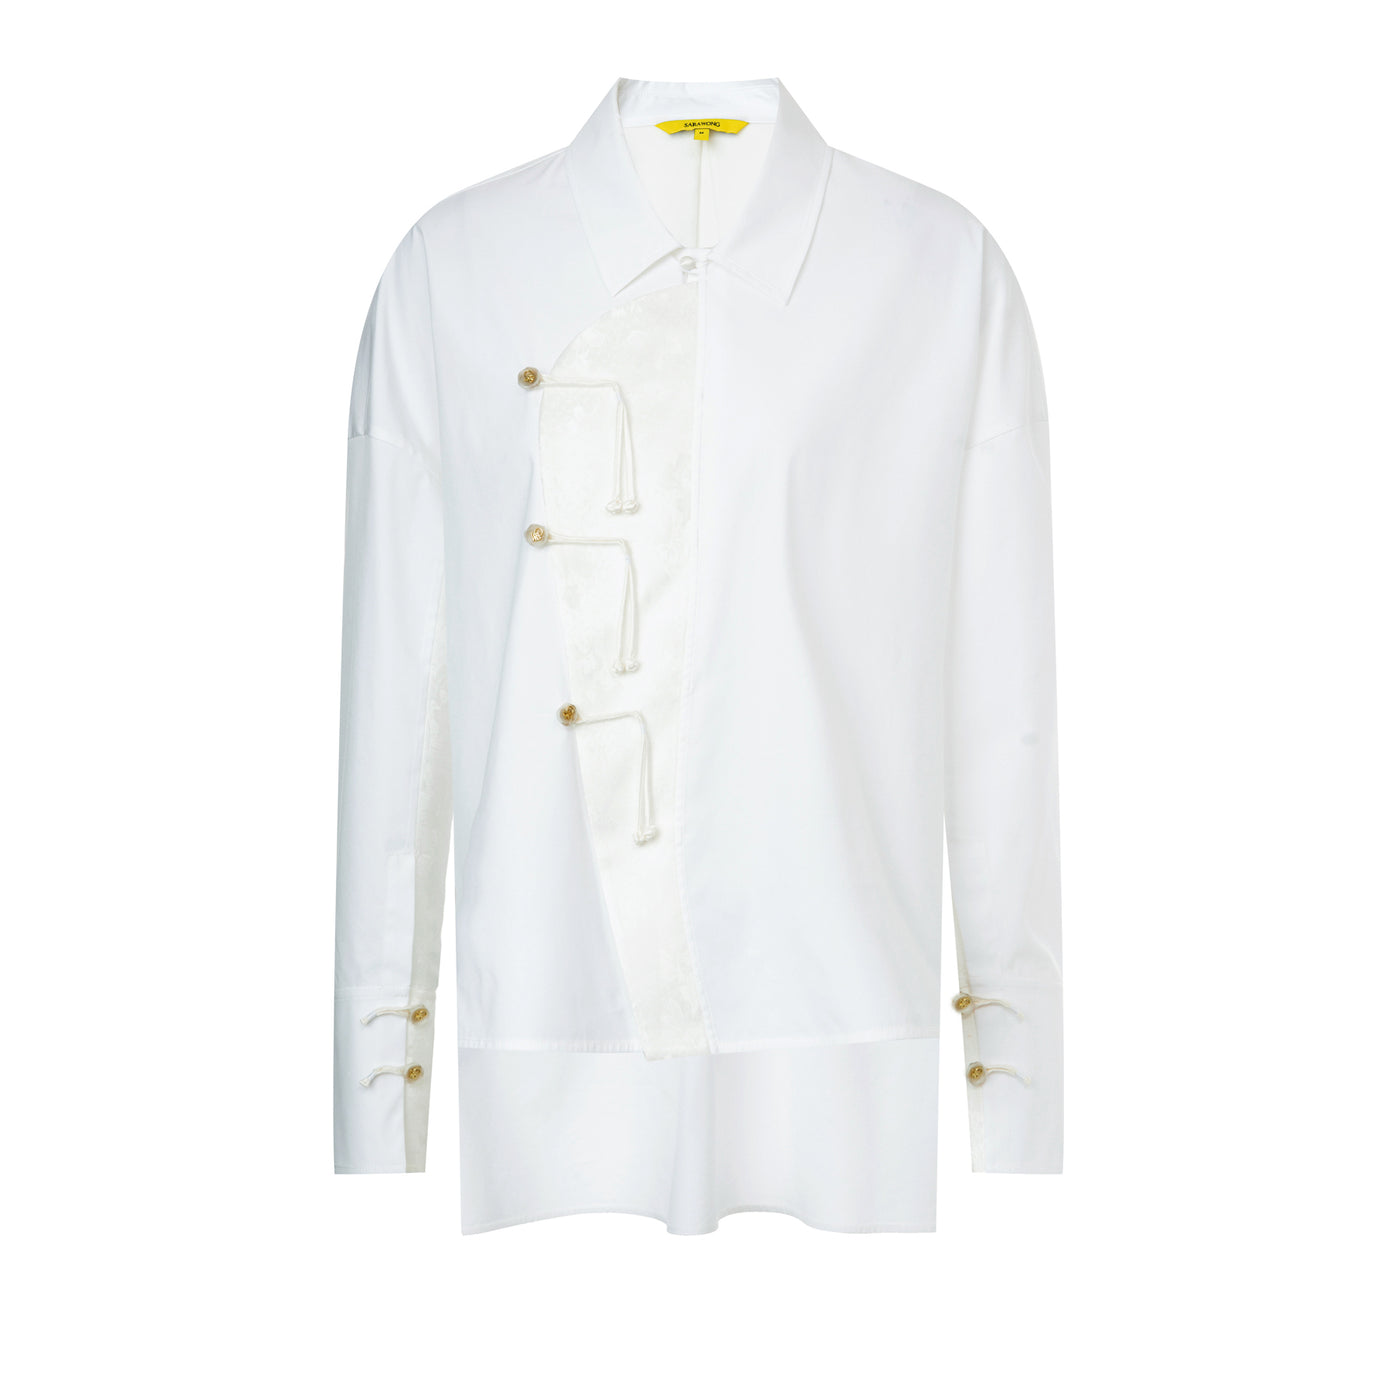 White jacquard paneled shirt